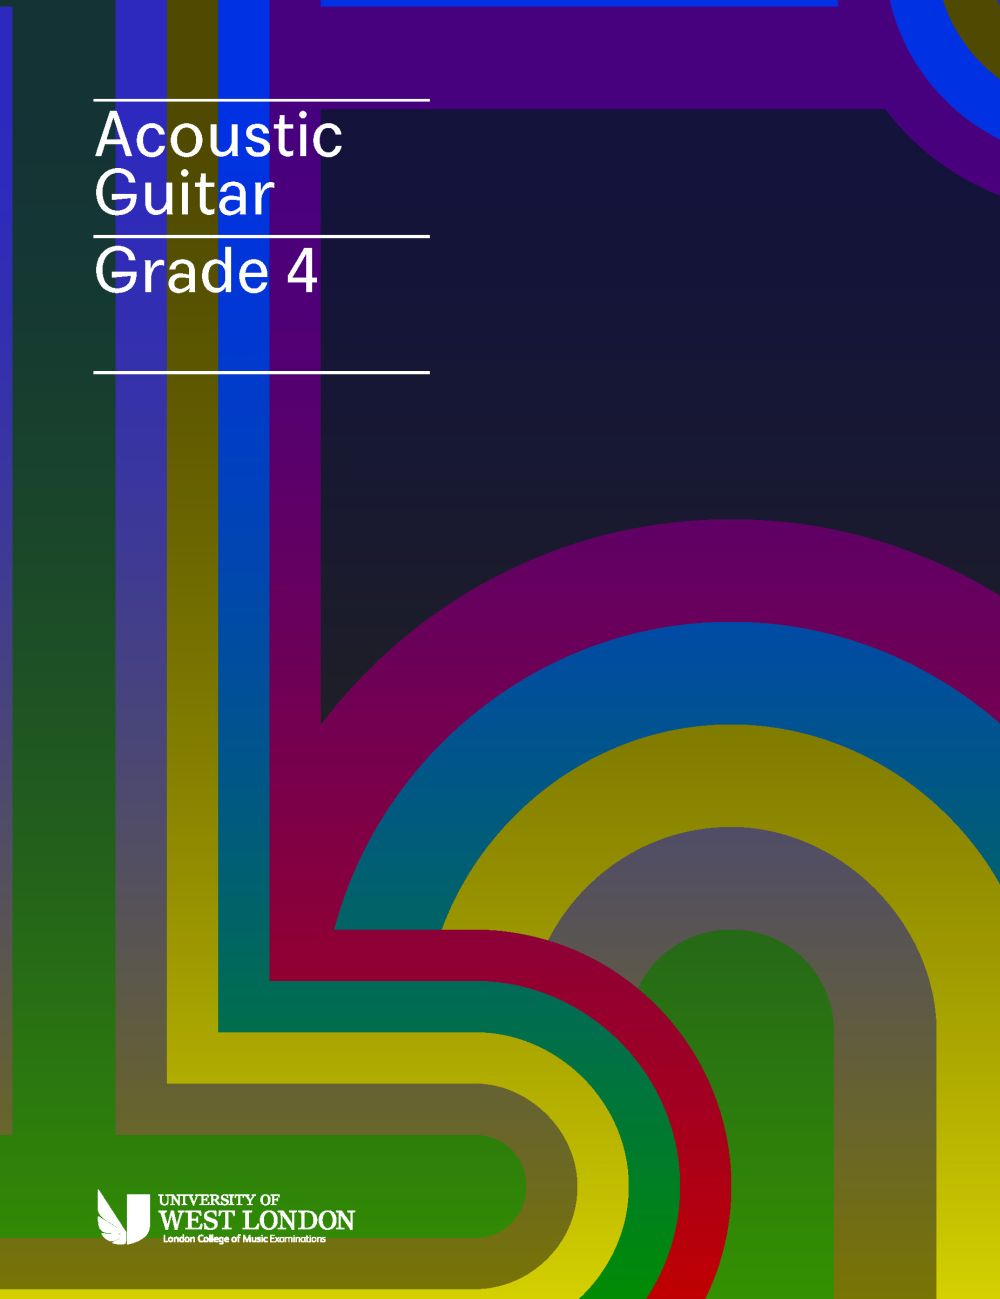 LCM Acoustic Guitar Handbook Grade 4 2020: Acoustic Guitar: Instrumental Tutor